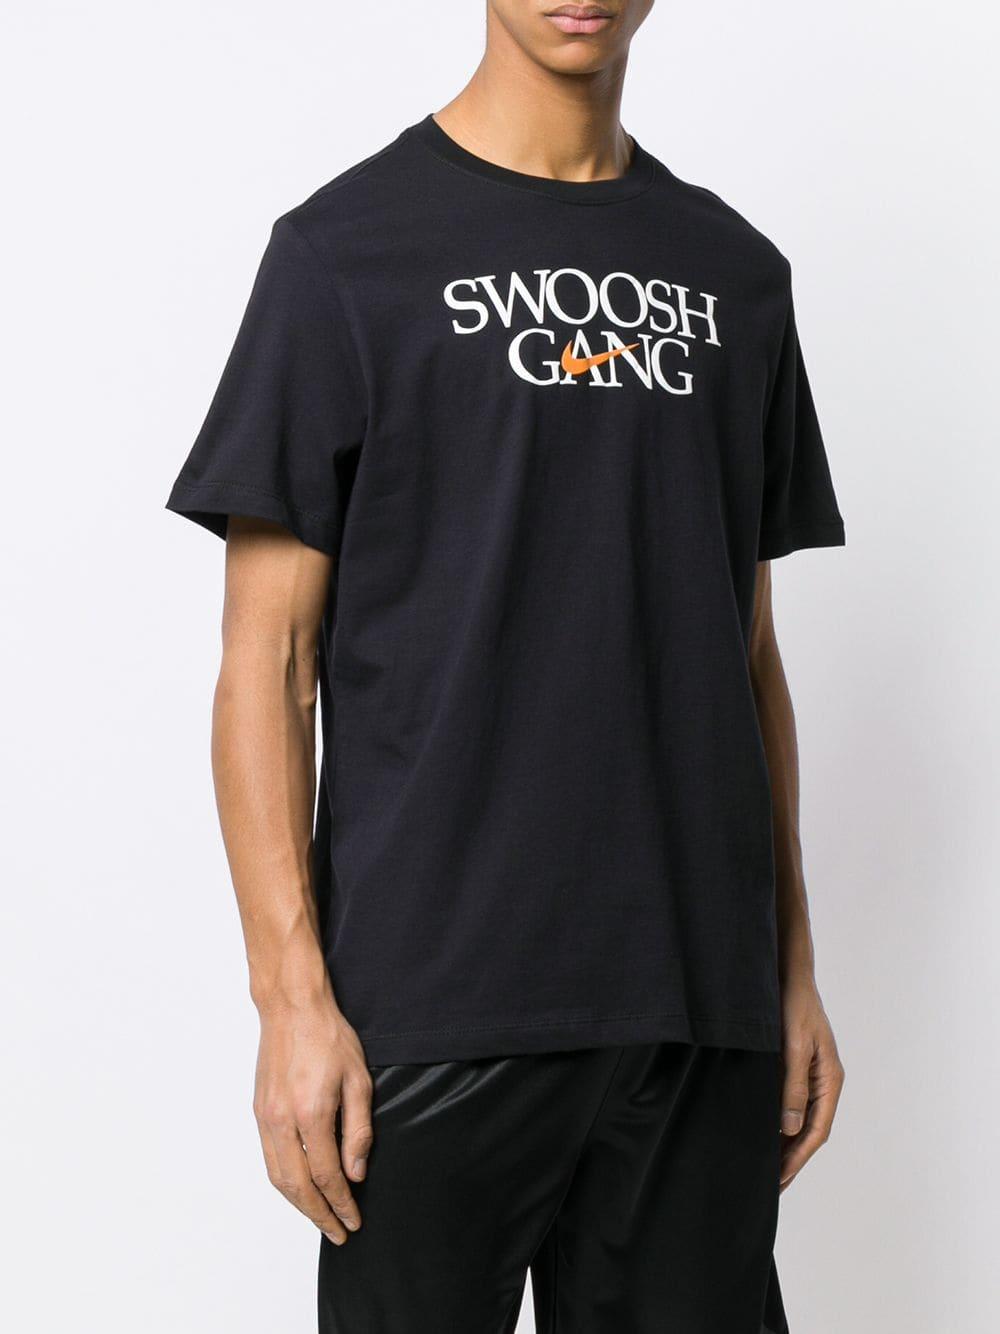 Nike Cotton Swoosh Gang T-shirt in Black for Men | Lyst